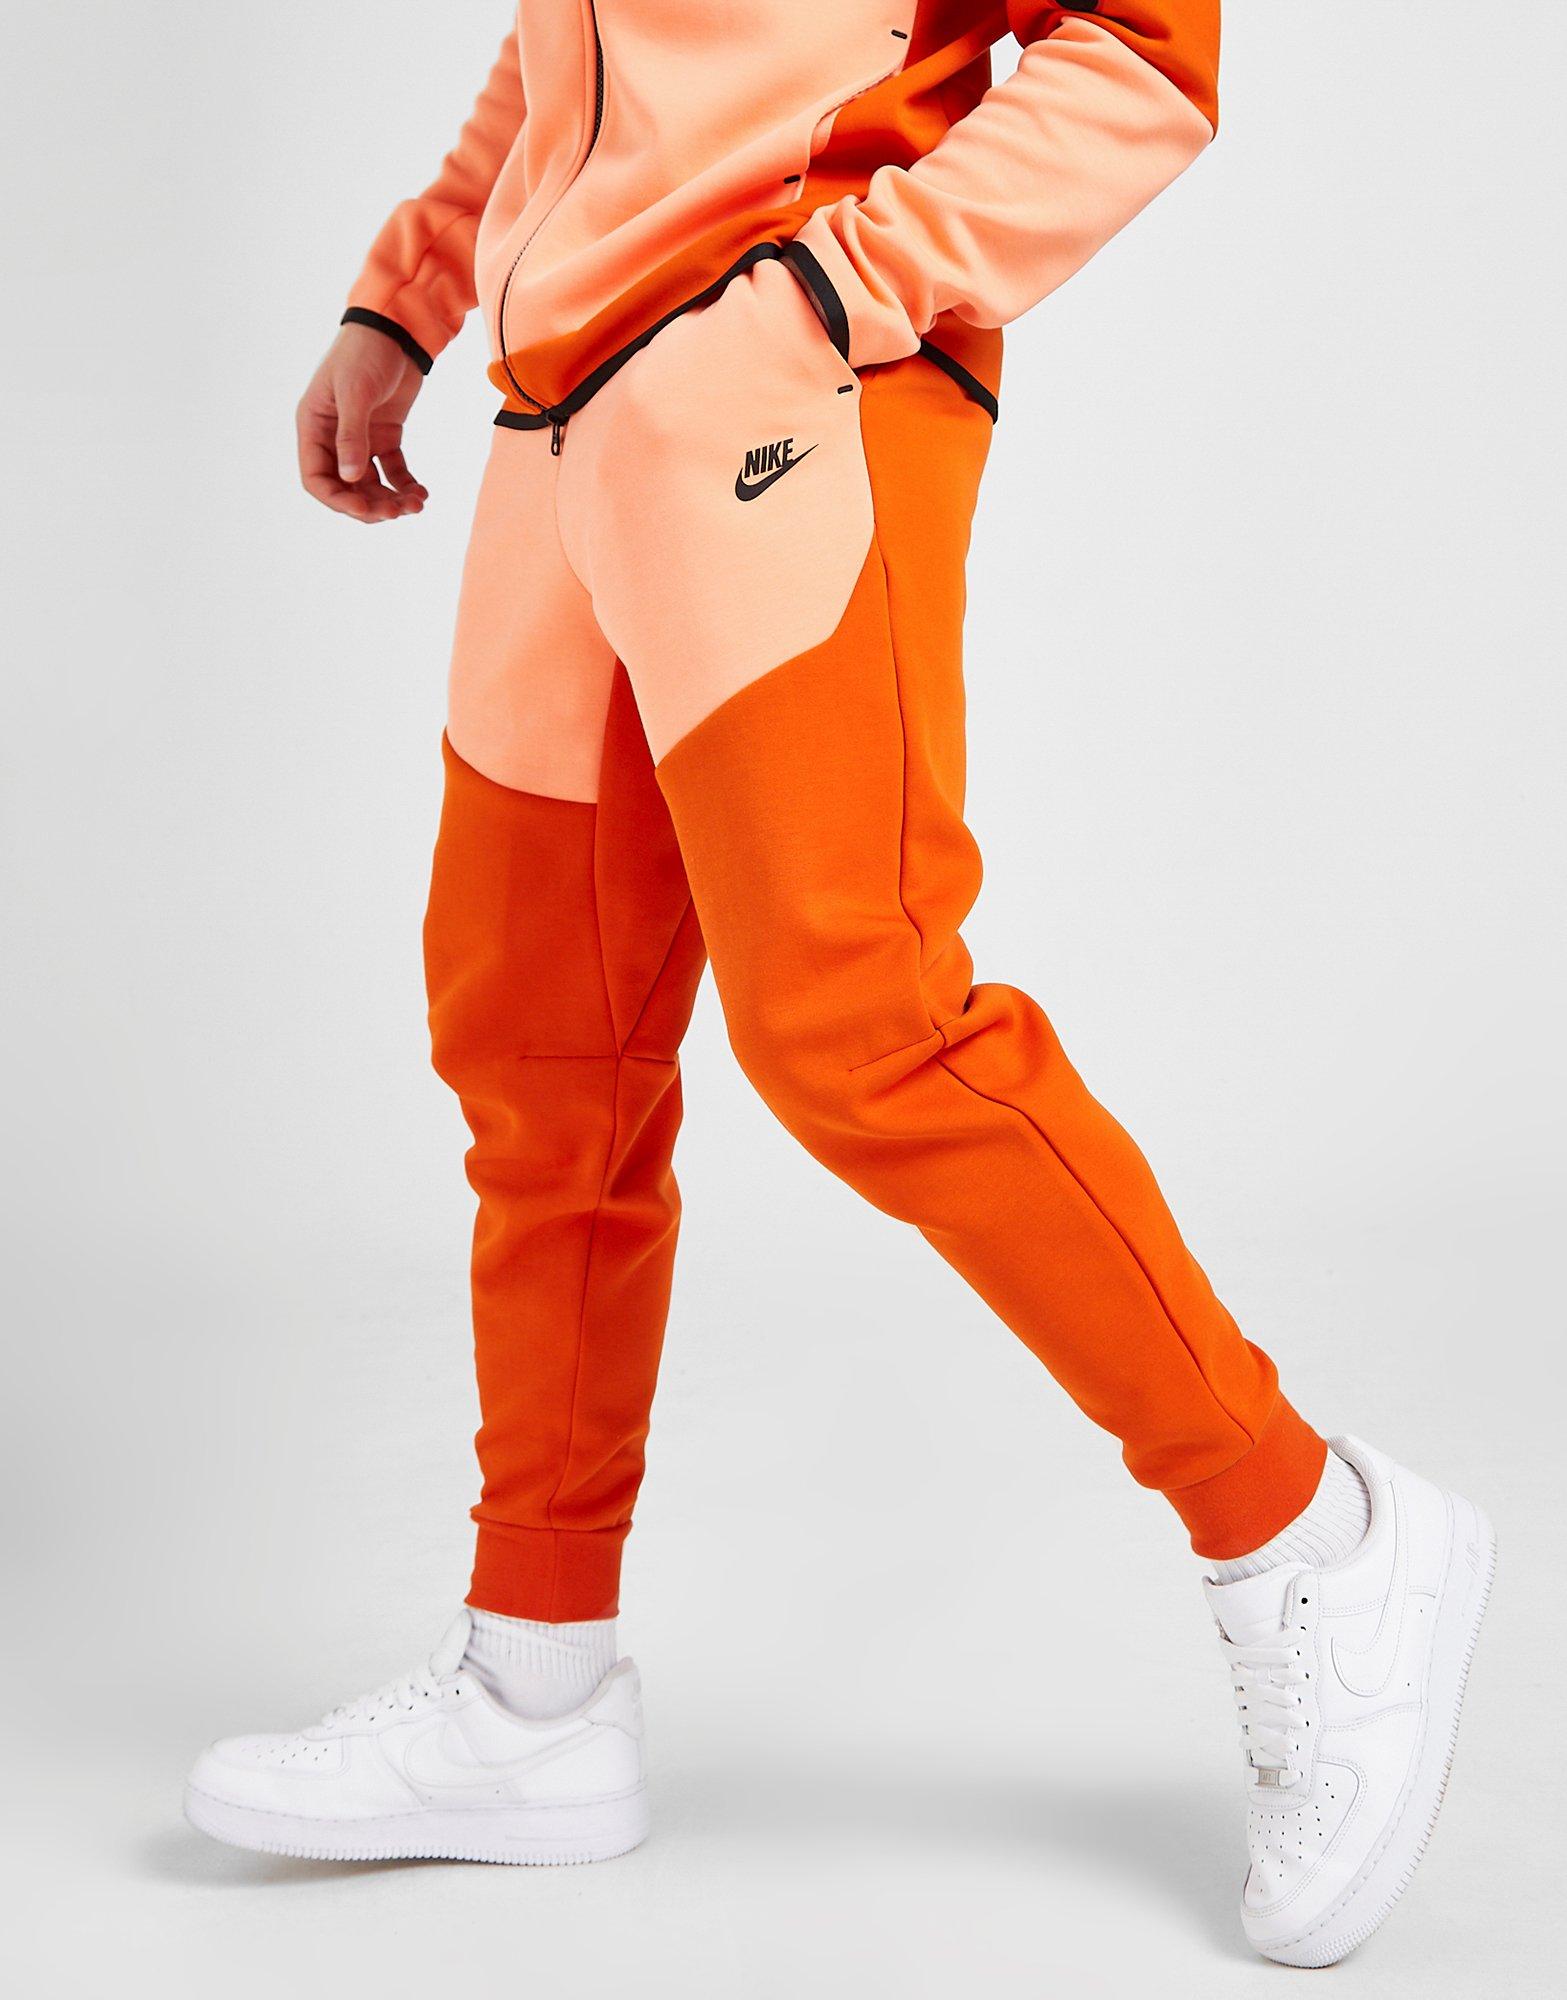 nike orange track pants